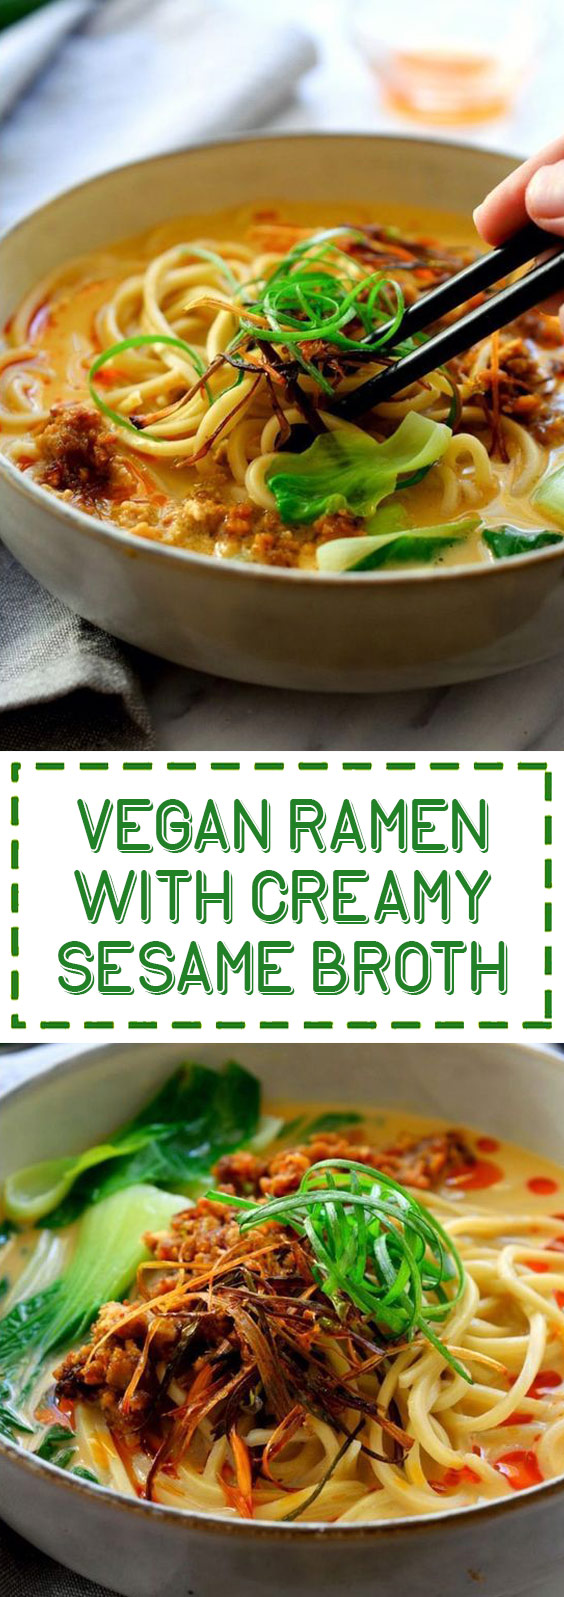 Vegan Ramen with Creamy Sesame Broth